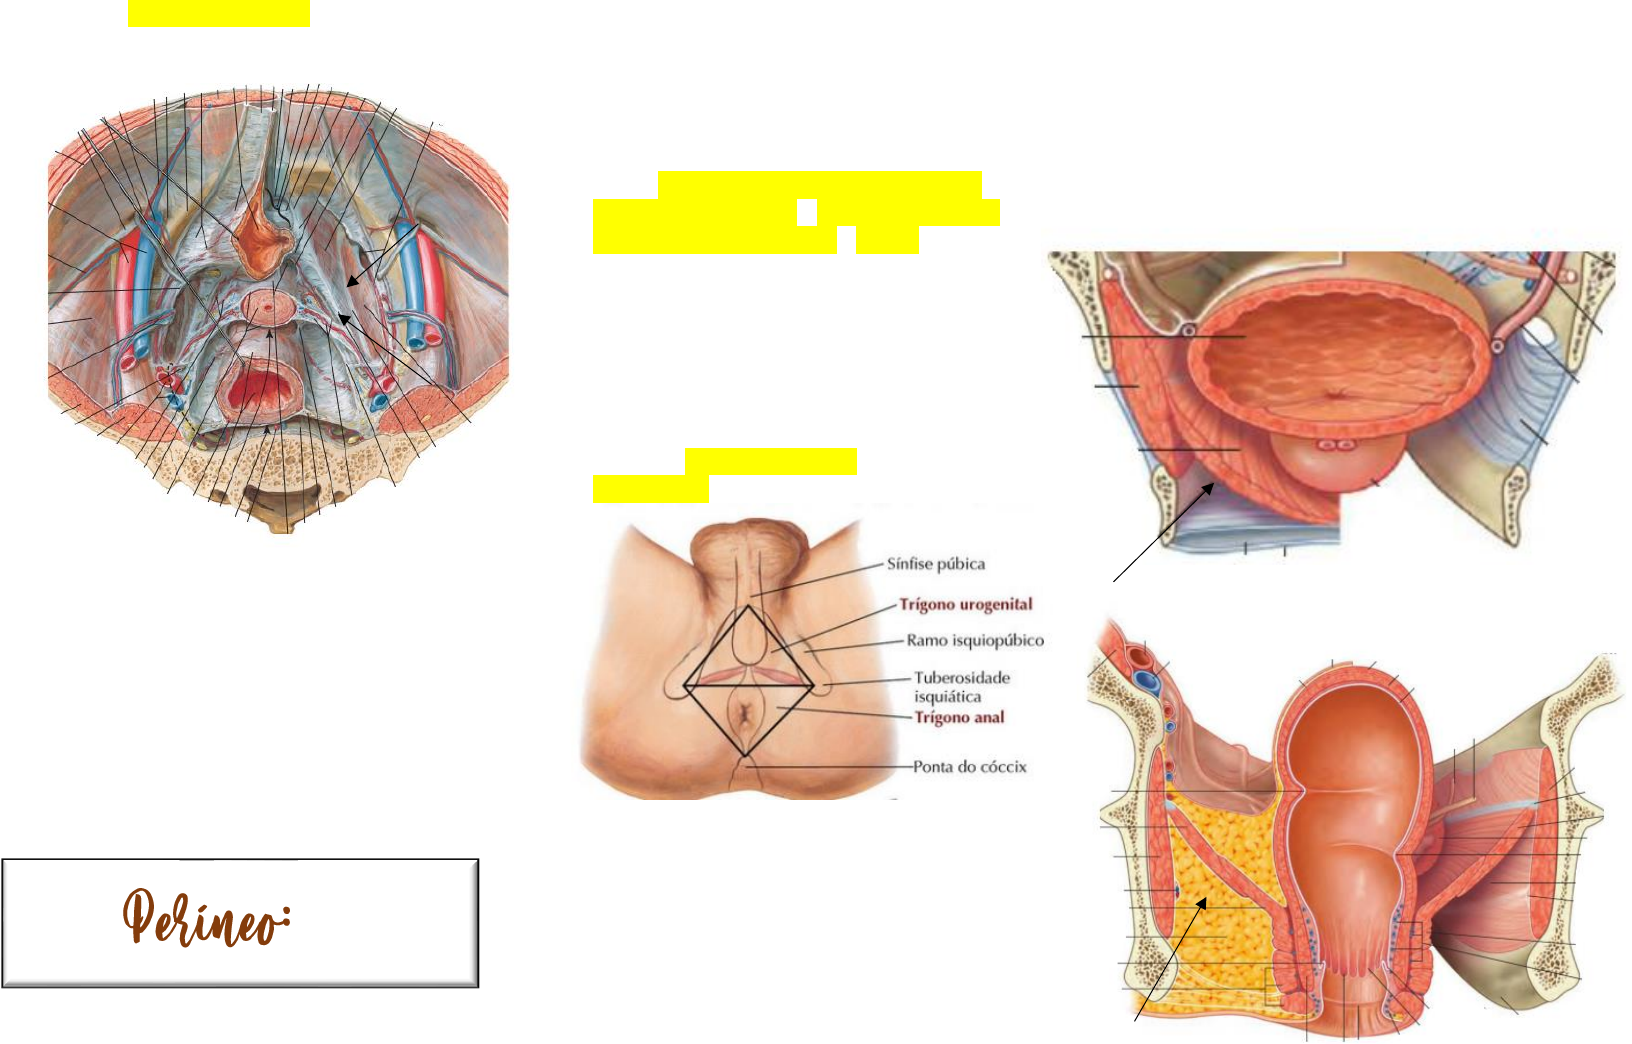 Anatomia da Pelve - Anatomia I